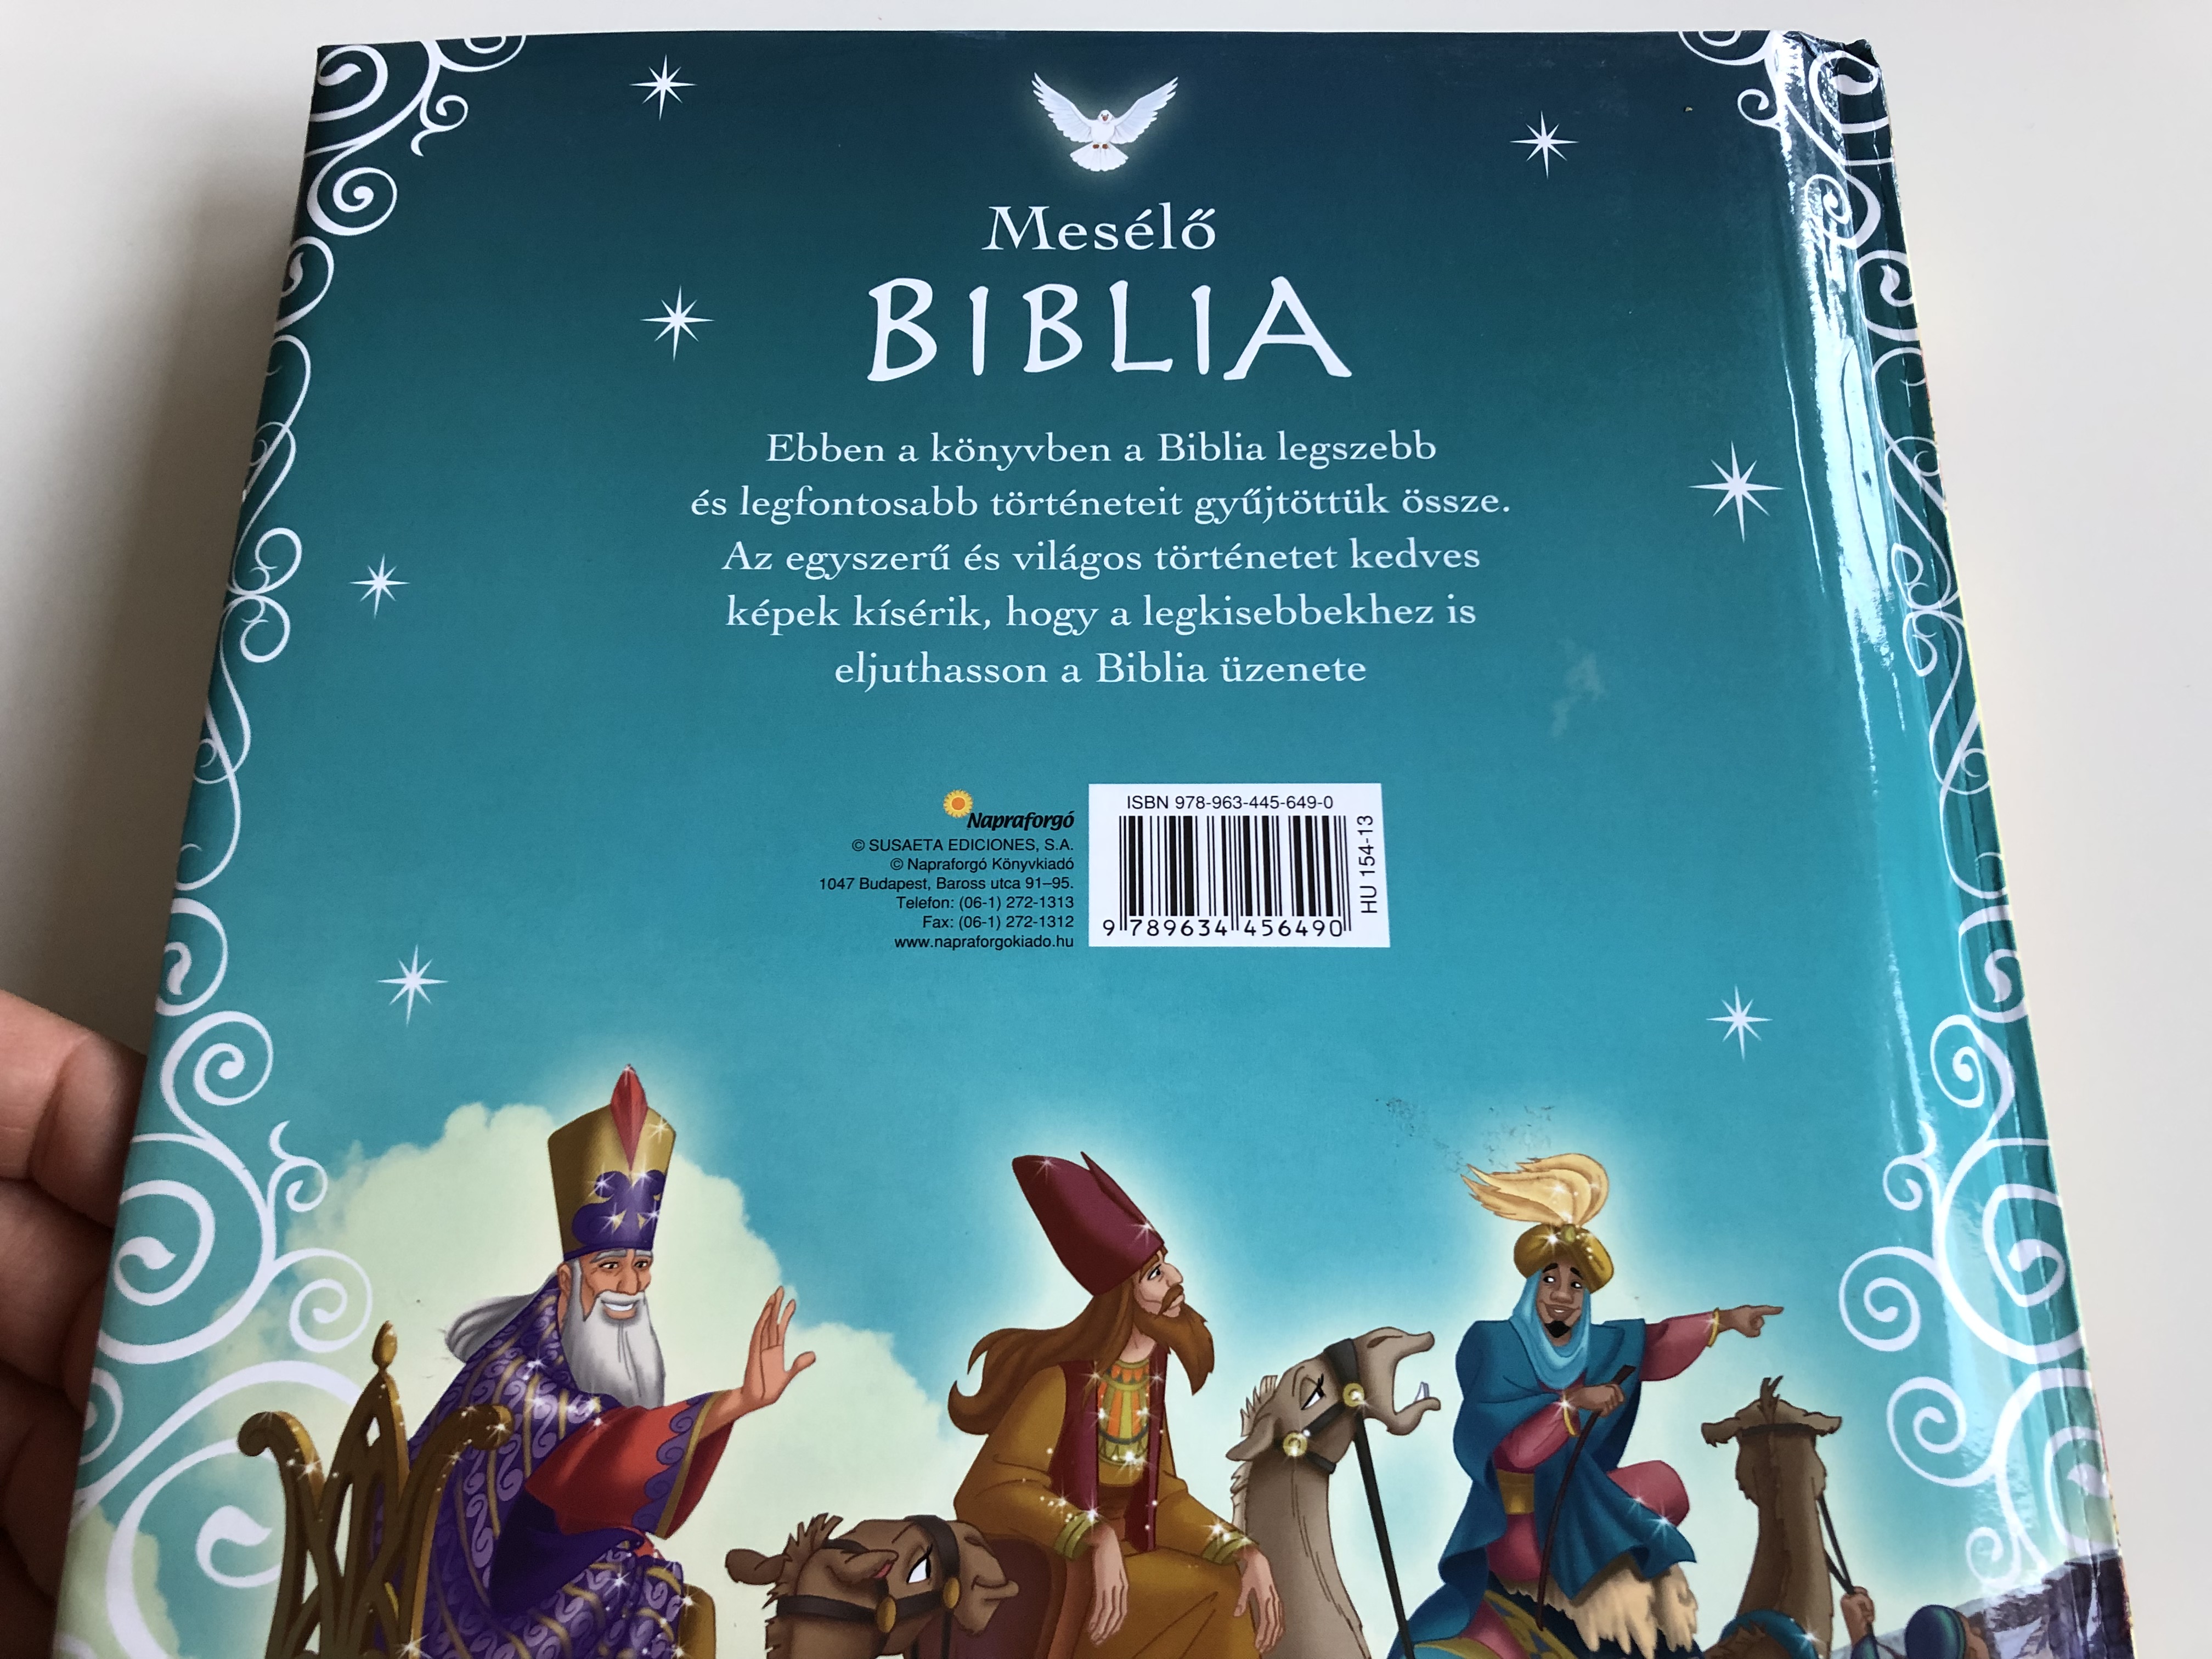 mes-l-biblia-by-silvia-alonso-hungarian-translation-of-biblia-infantil-illustrations-by-manuel-galiana-hardcover-2015-napraforg-kiad-13-.jpg